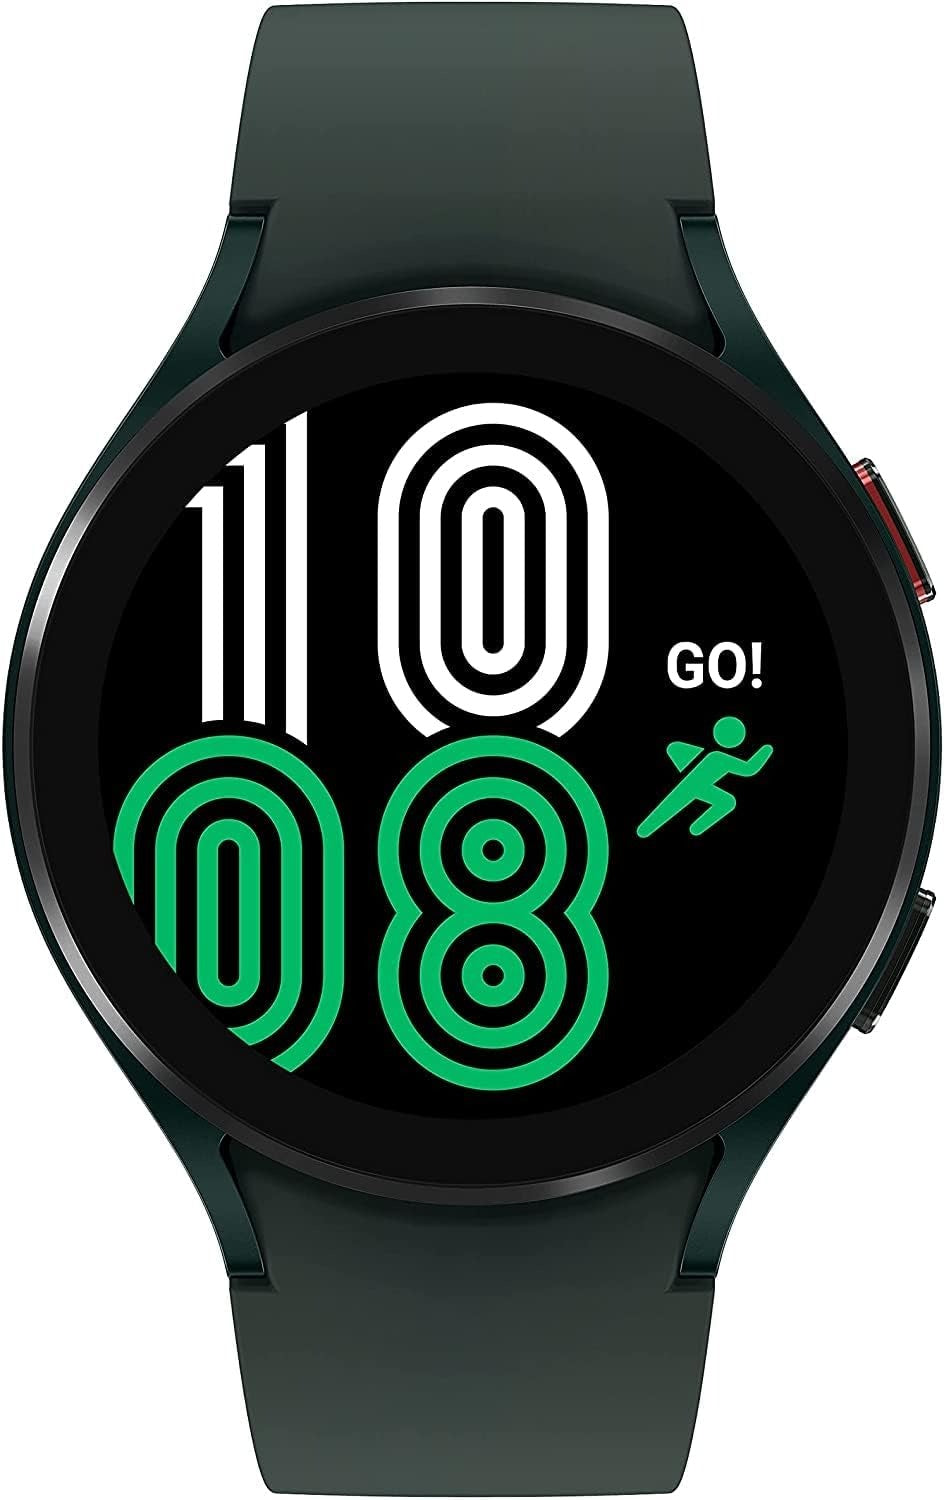 Samsung Galaxy Watch 4 Smartwatch (44mm, WIFI + LTE, Bluetooth) - Green (Pre-Owned)